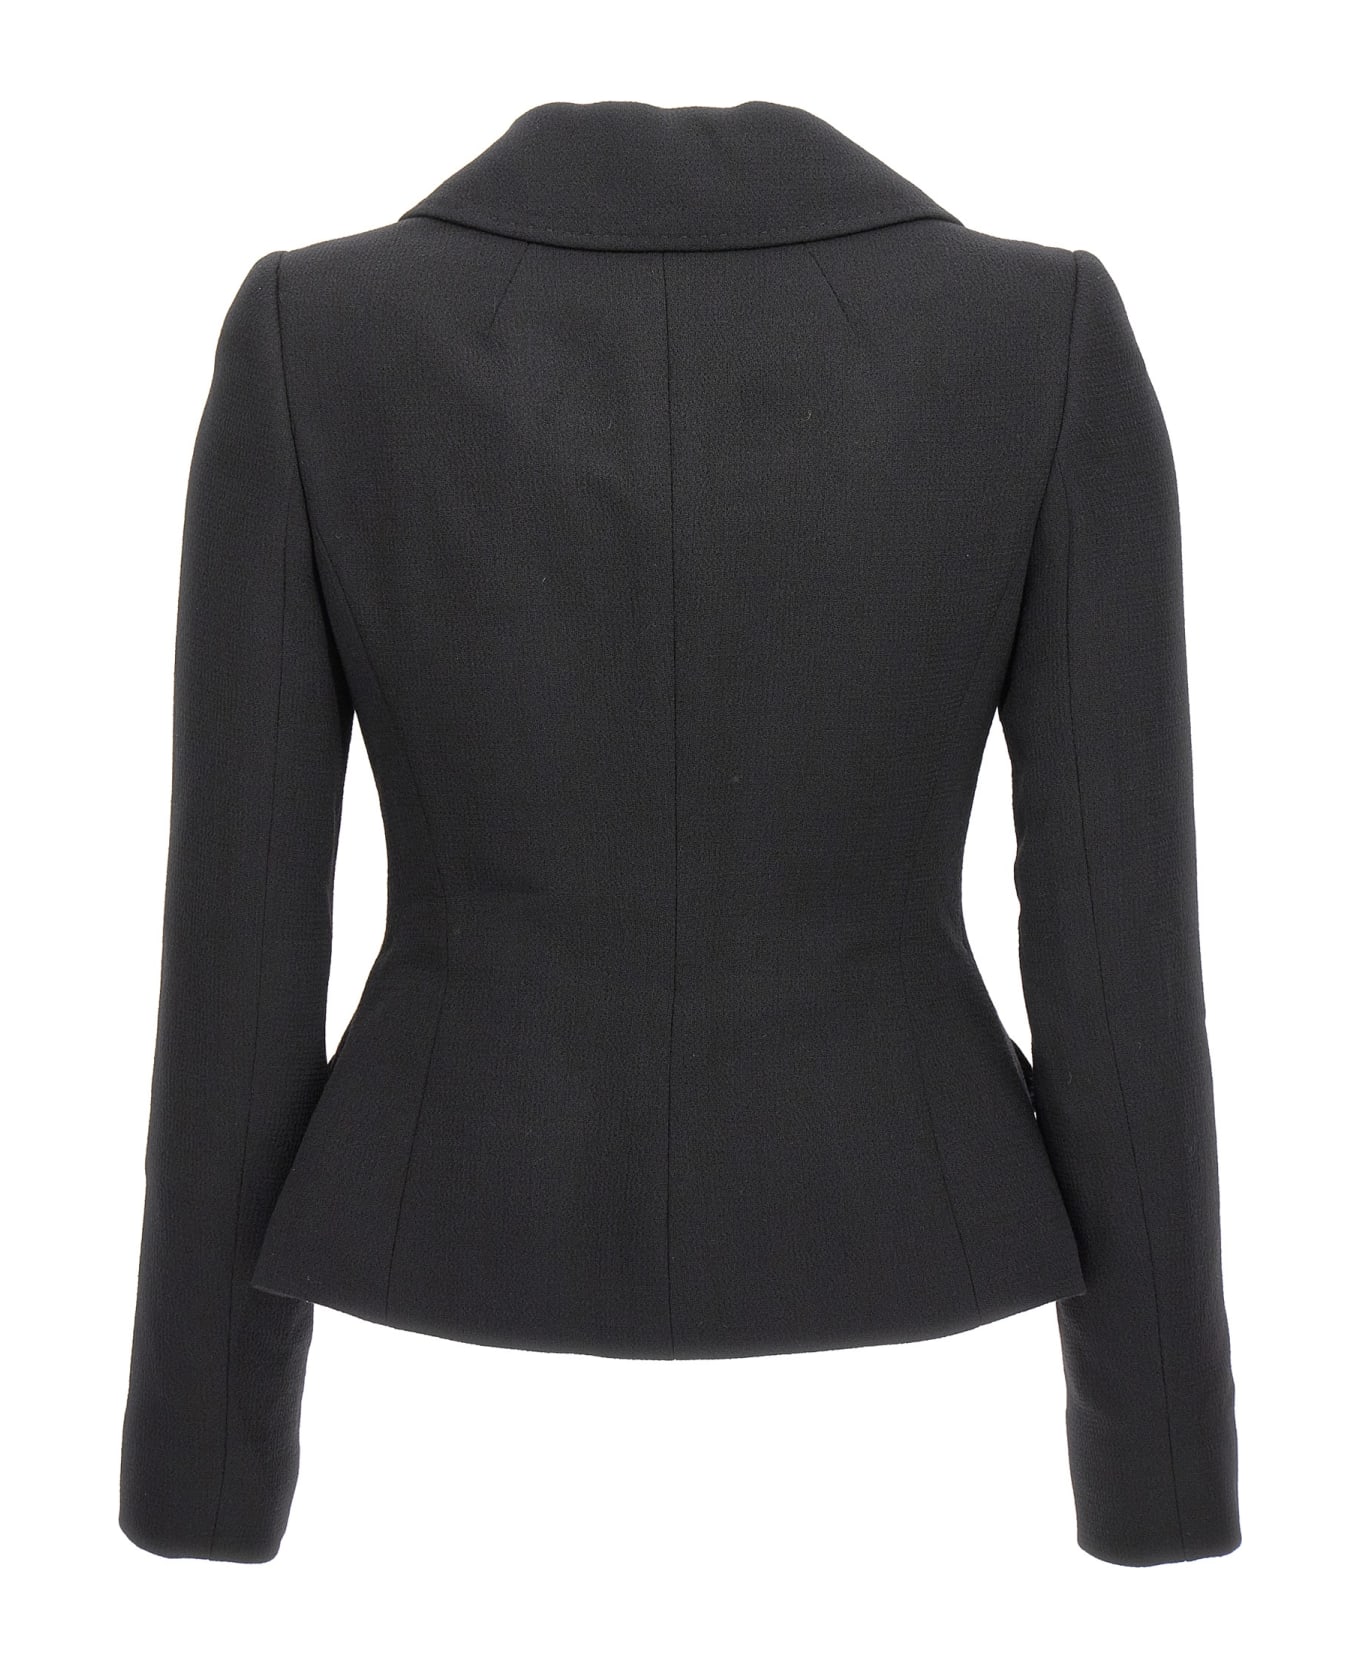 Dolce & Gabbana Blazer Jacket - Black ジャケット